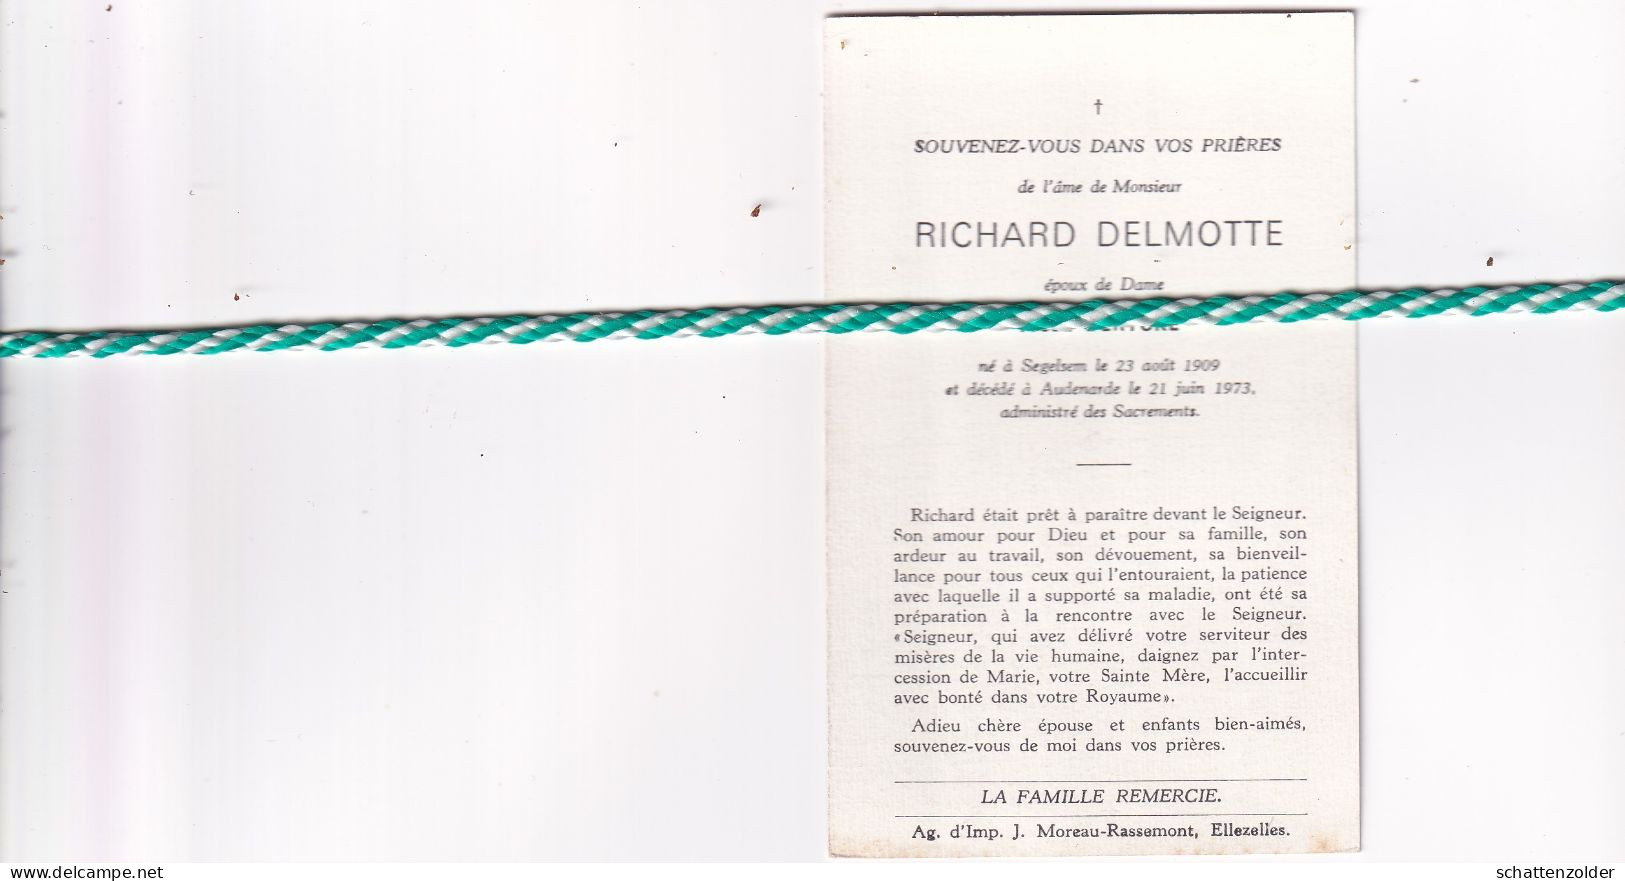 Richard Delmotte-Derycke, Segelsem 1909, Audenarde 1973 - Esquela